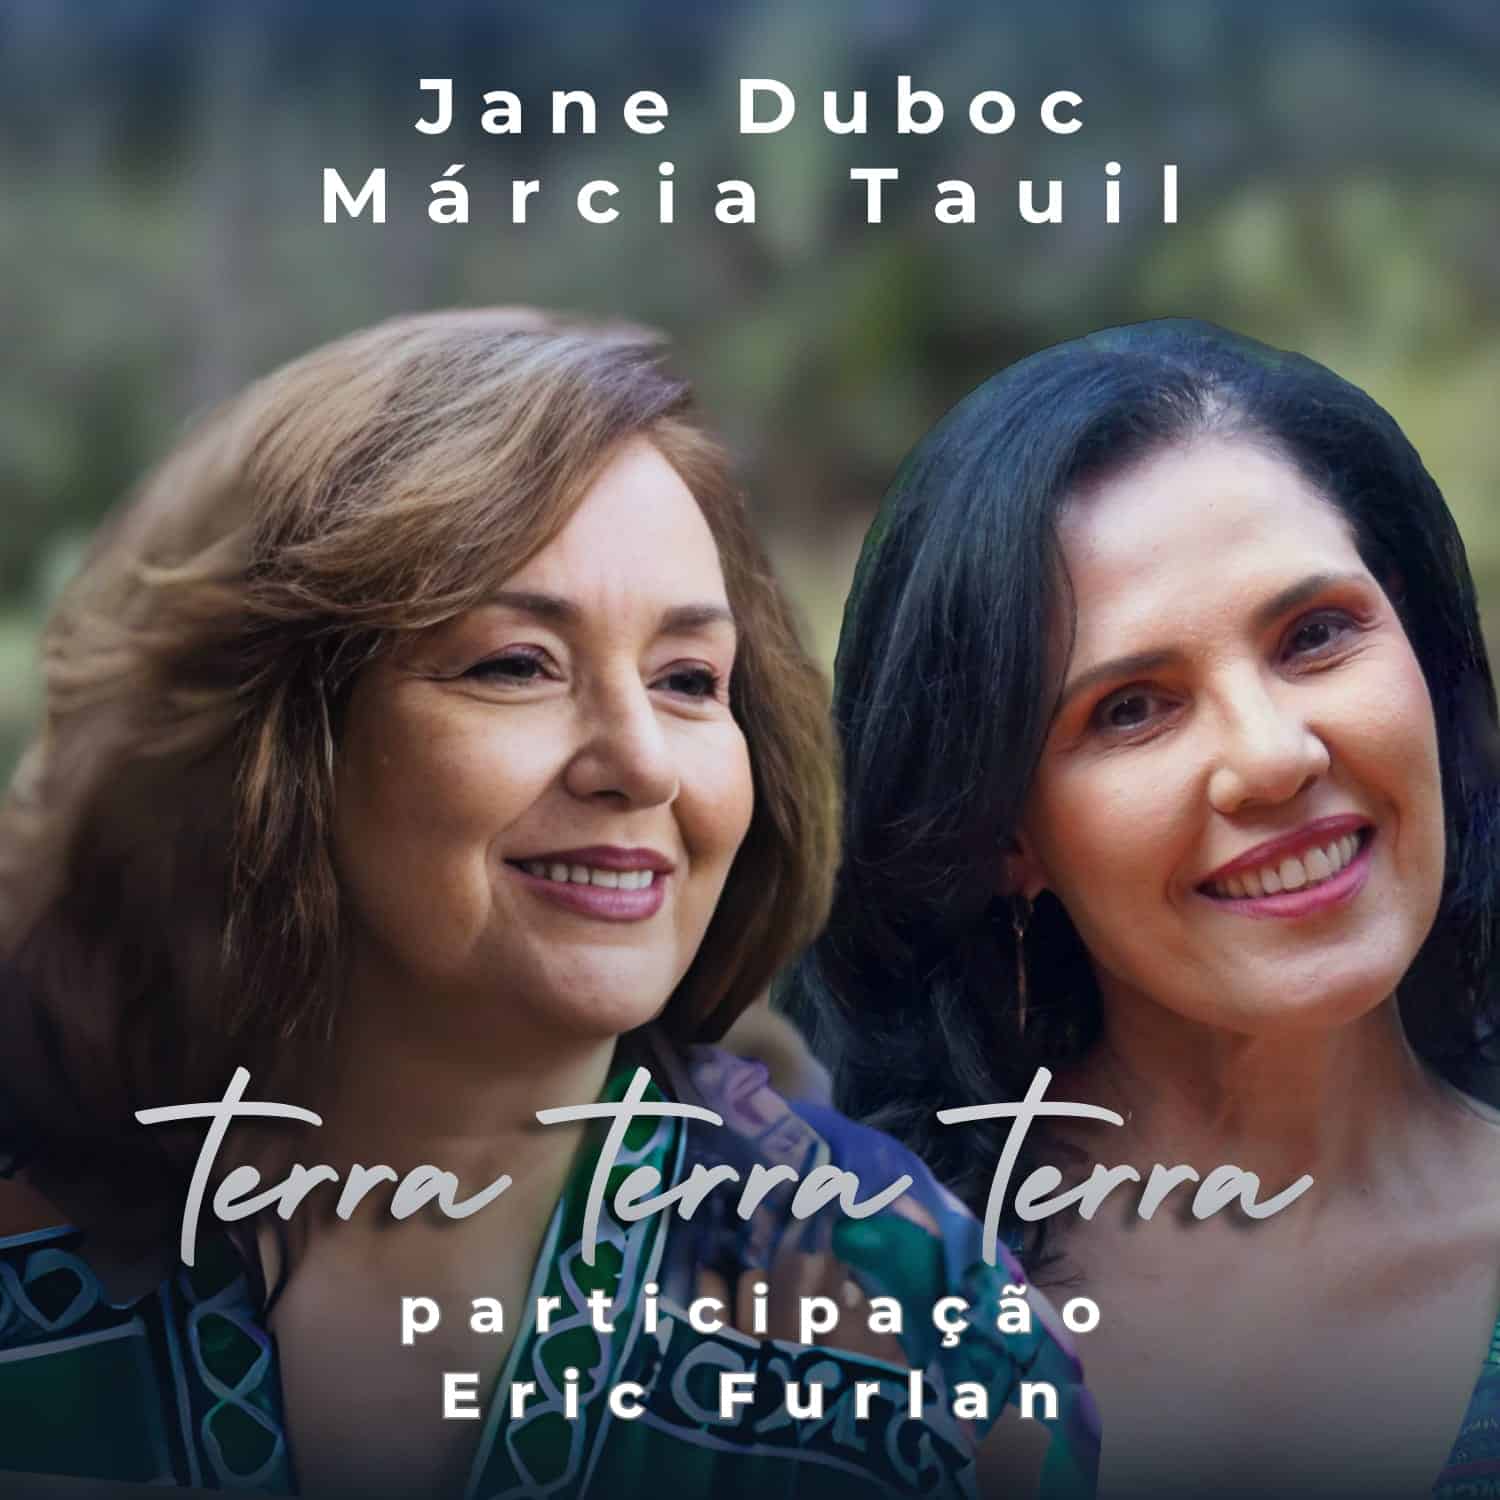 revistaprosaversoearte.com - Márcia Tauil e Jane Duboc lançam o single 'Terra, Terra, Terra'